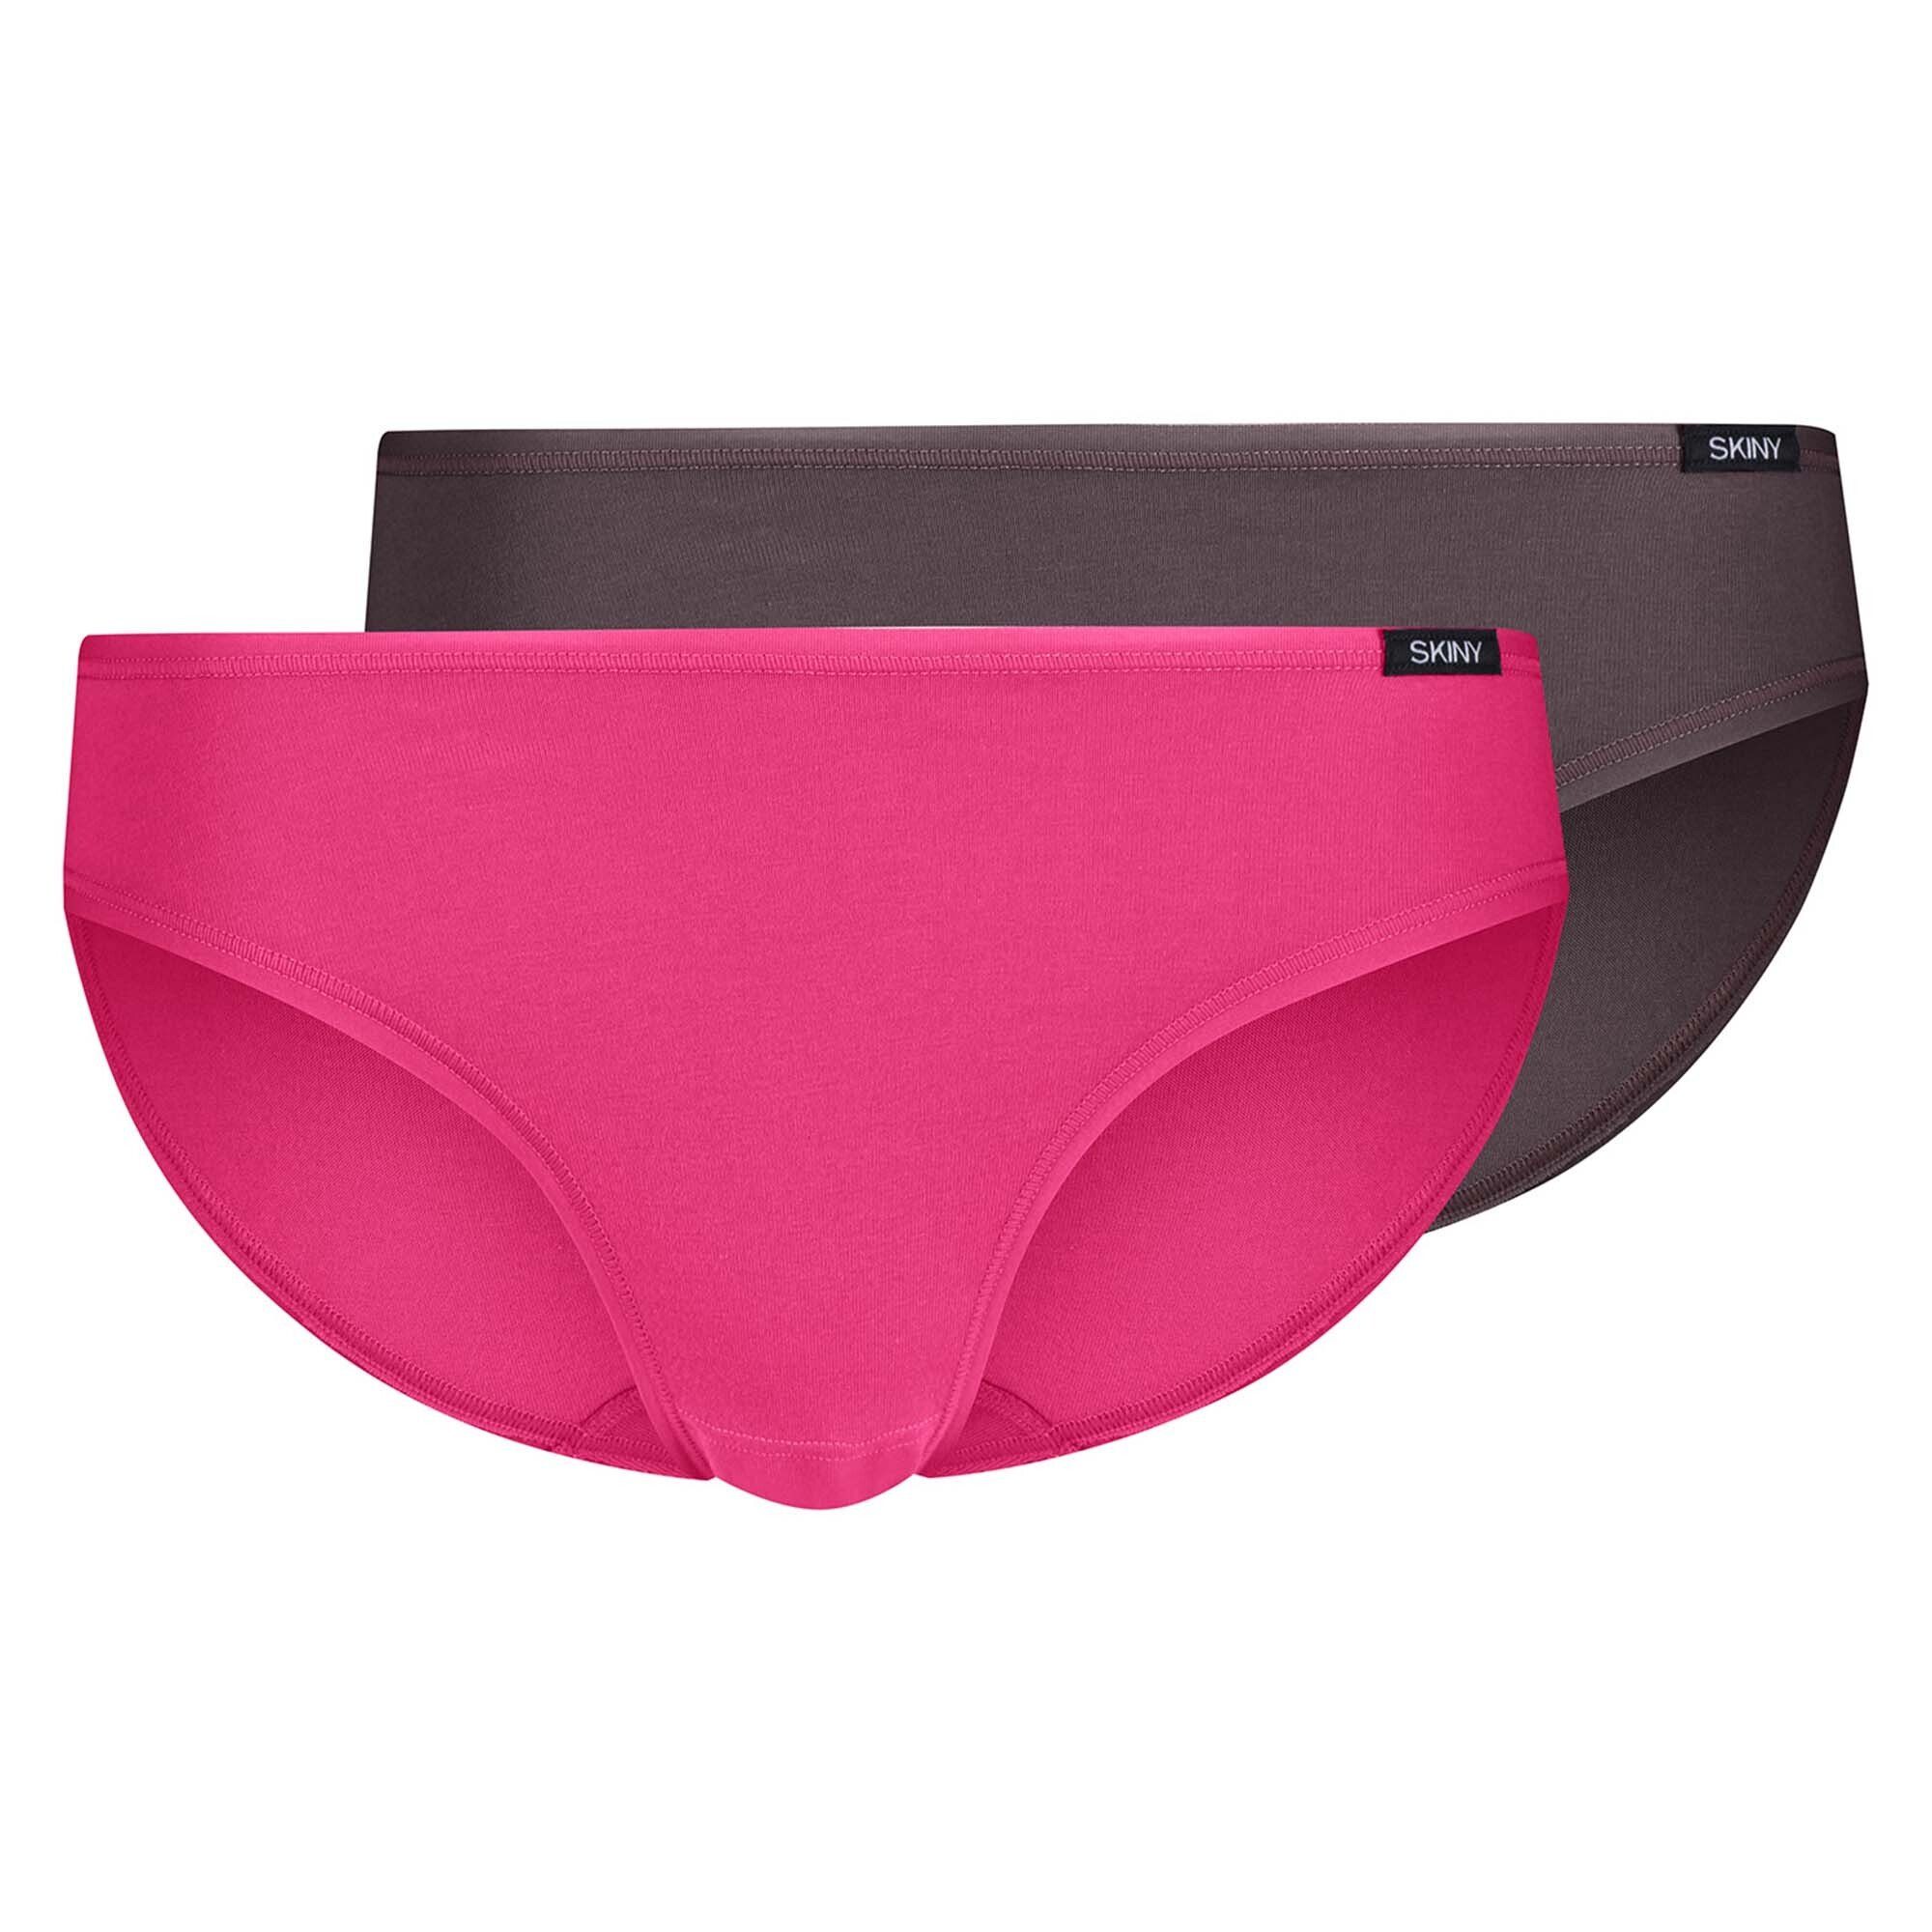 Skiny Slip, 2er Cotton Bikini Pink/Taupe Rio Pack Slip, Slip - Damen